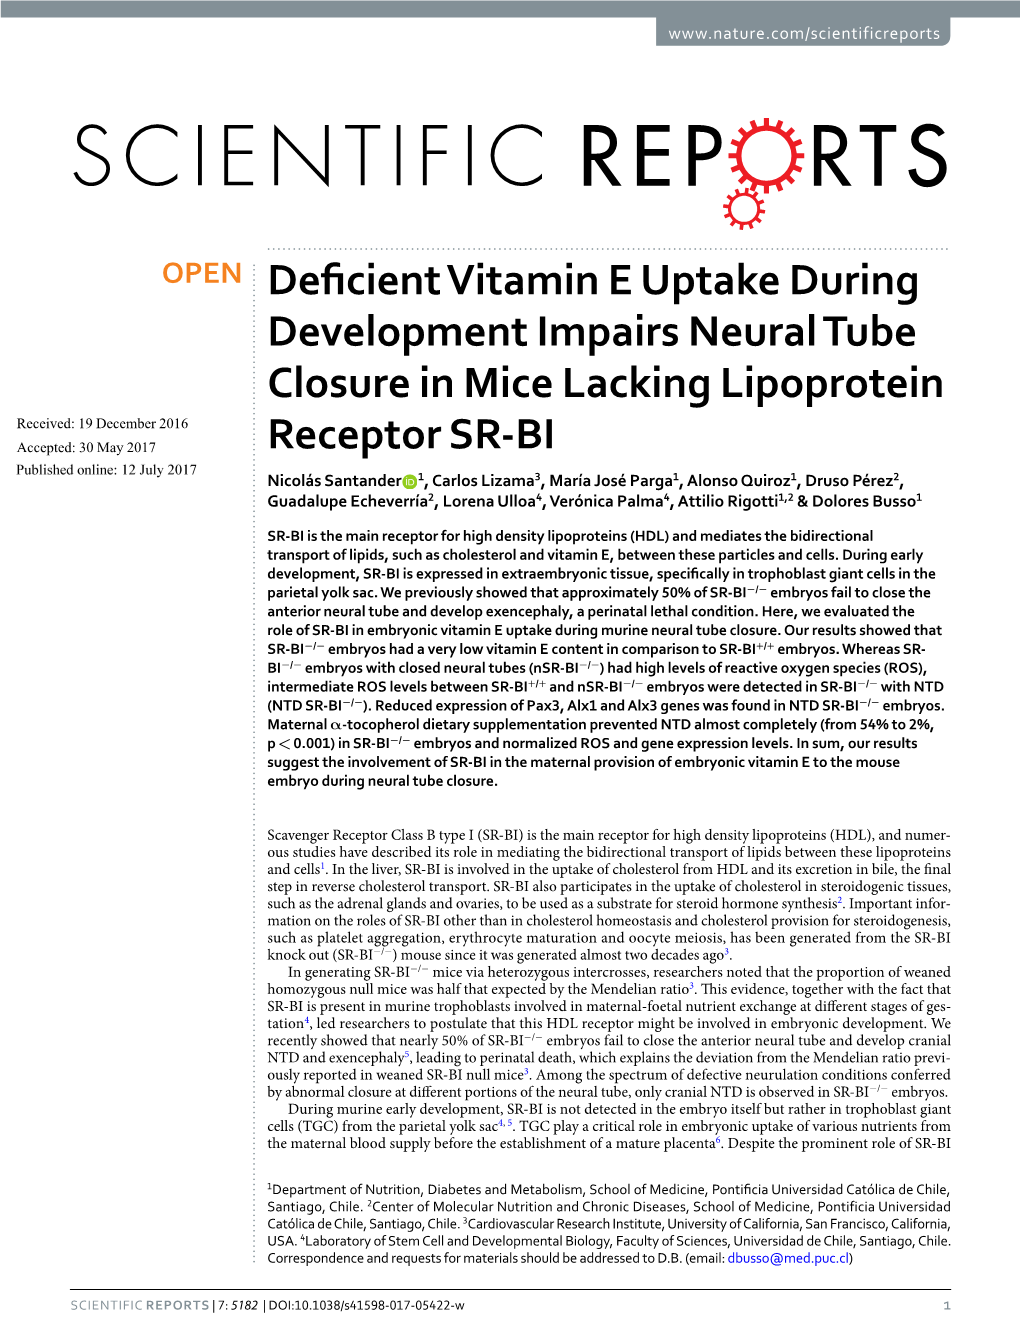 Deficient Vitamin E Uptake During Development Impairs Neural Tube